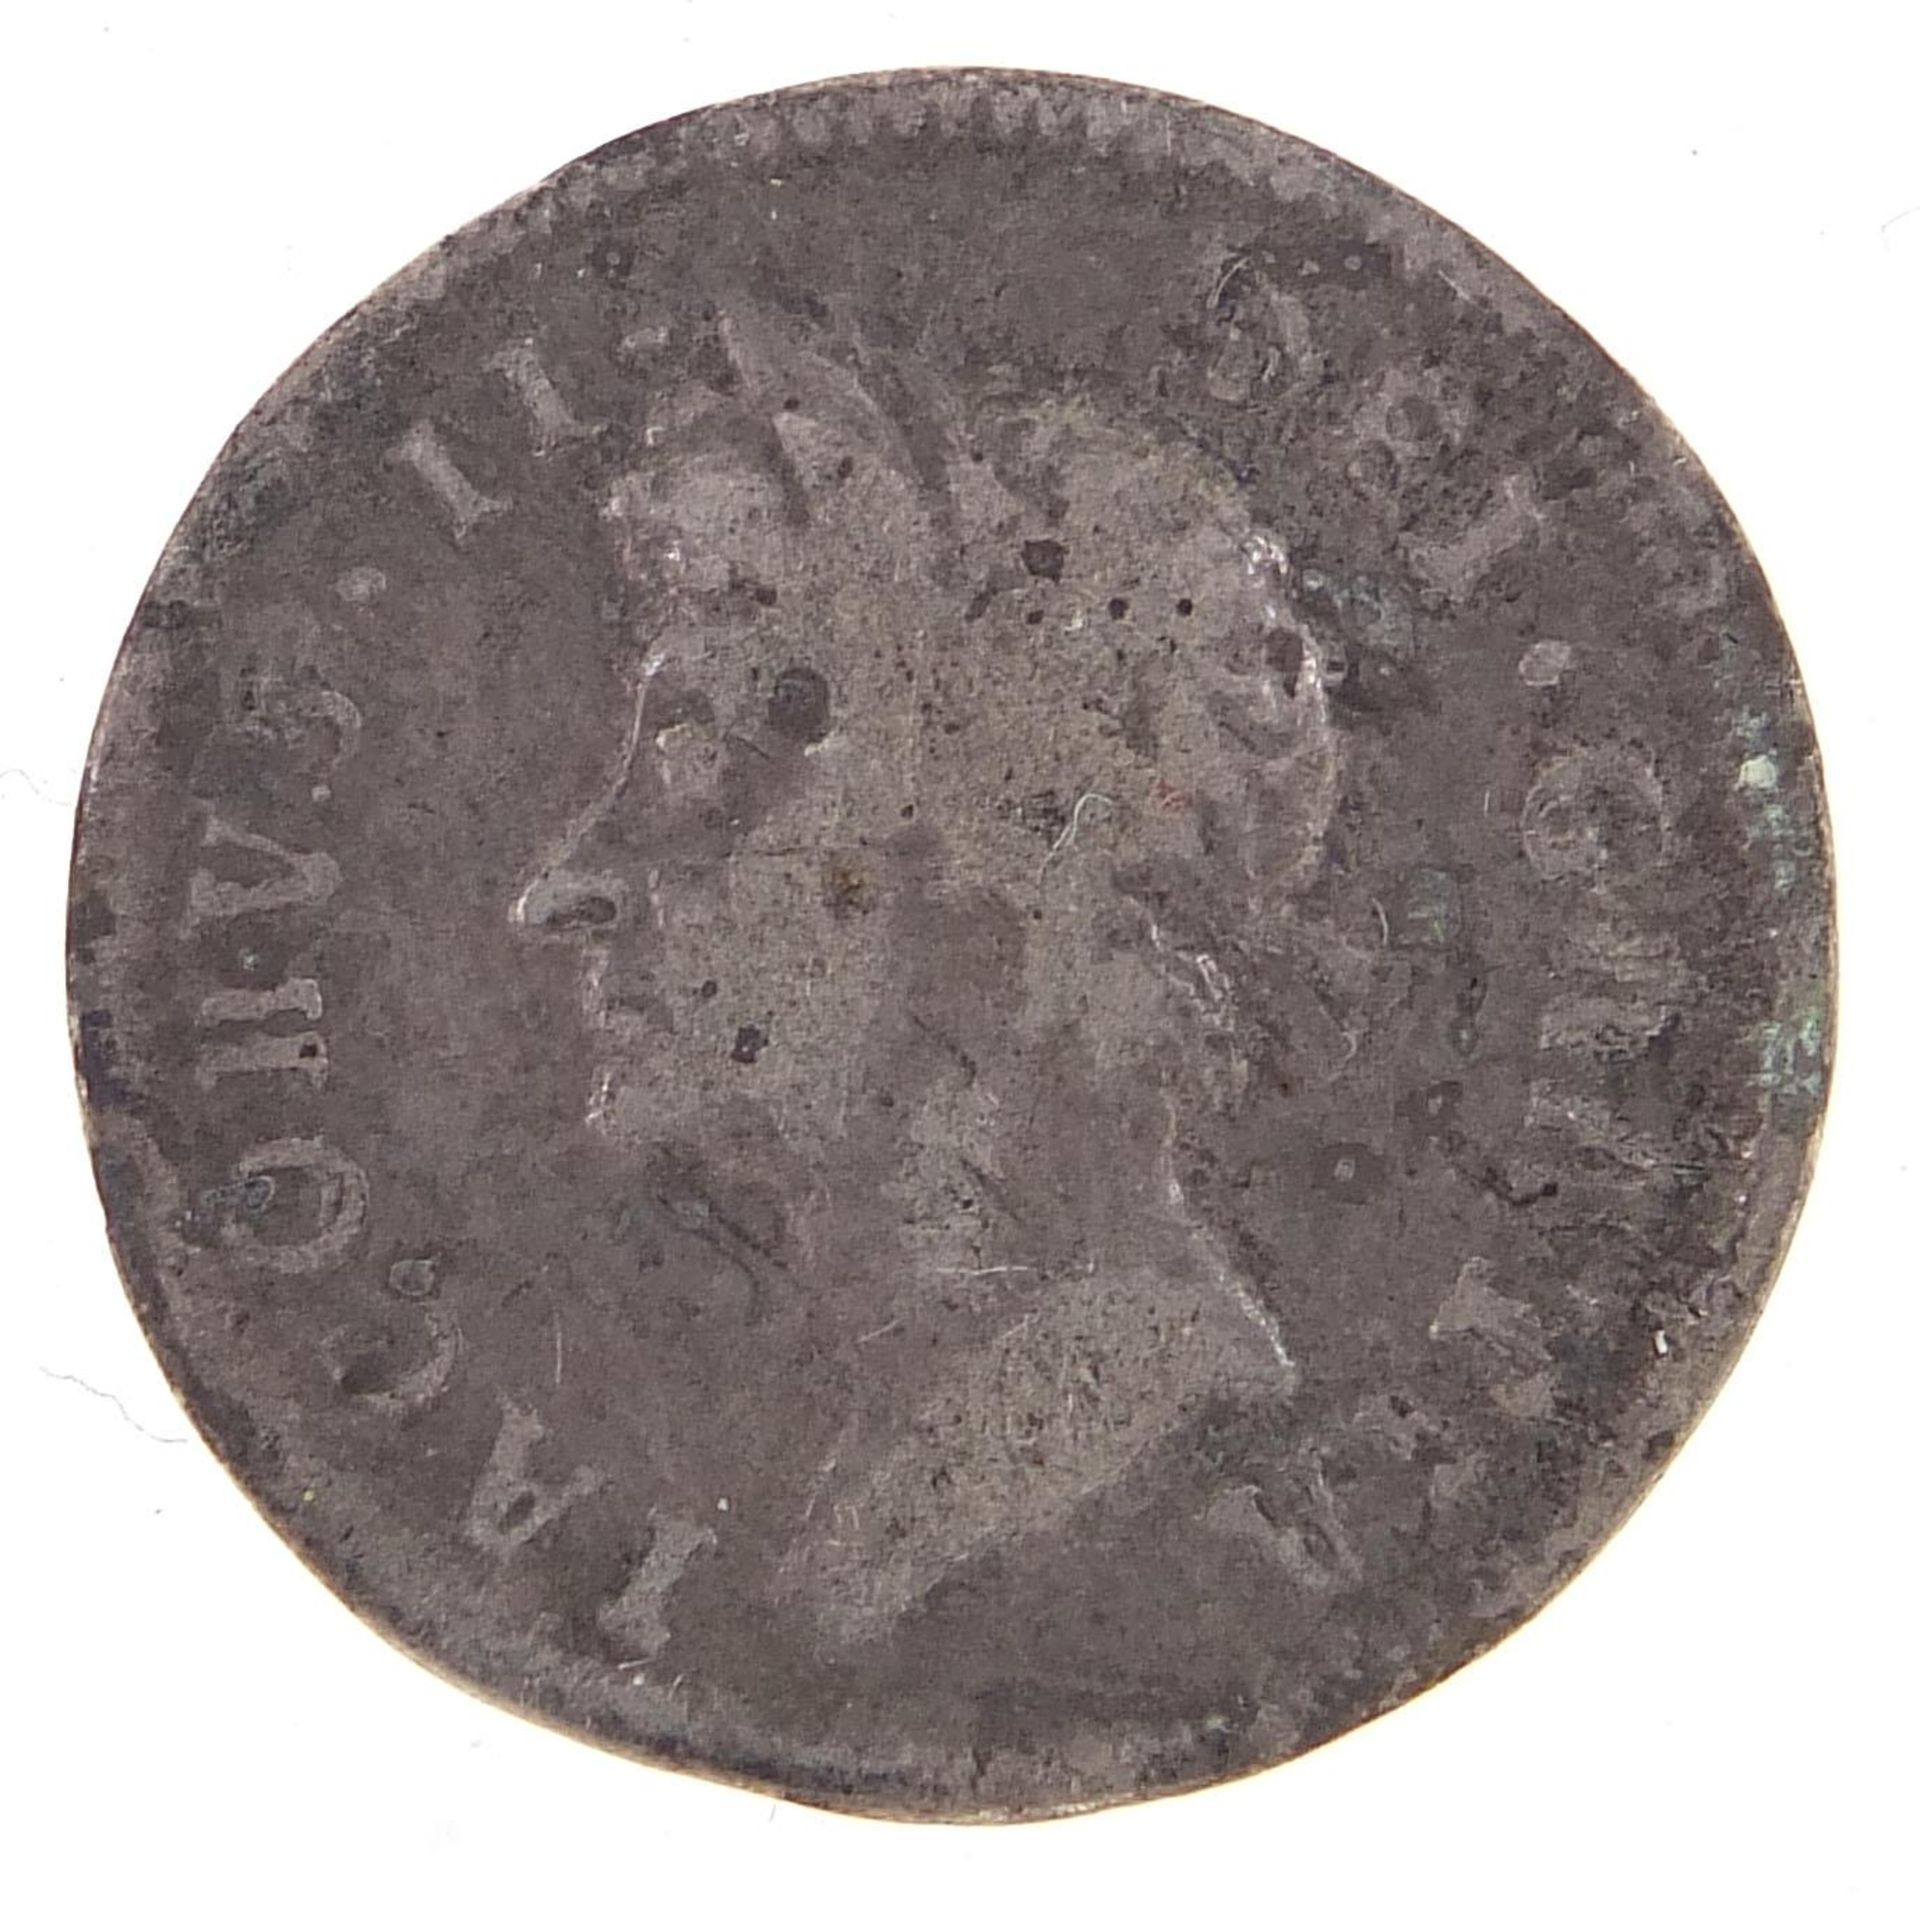 James II 1687 Maundy threepence - Image 2 of 2